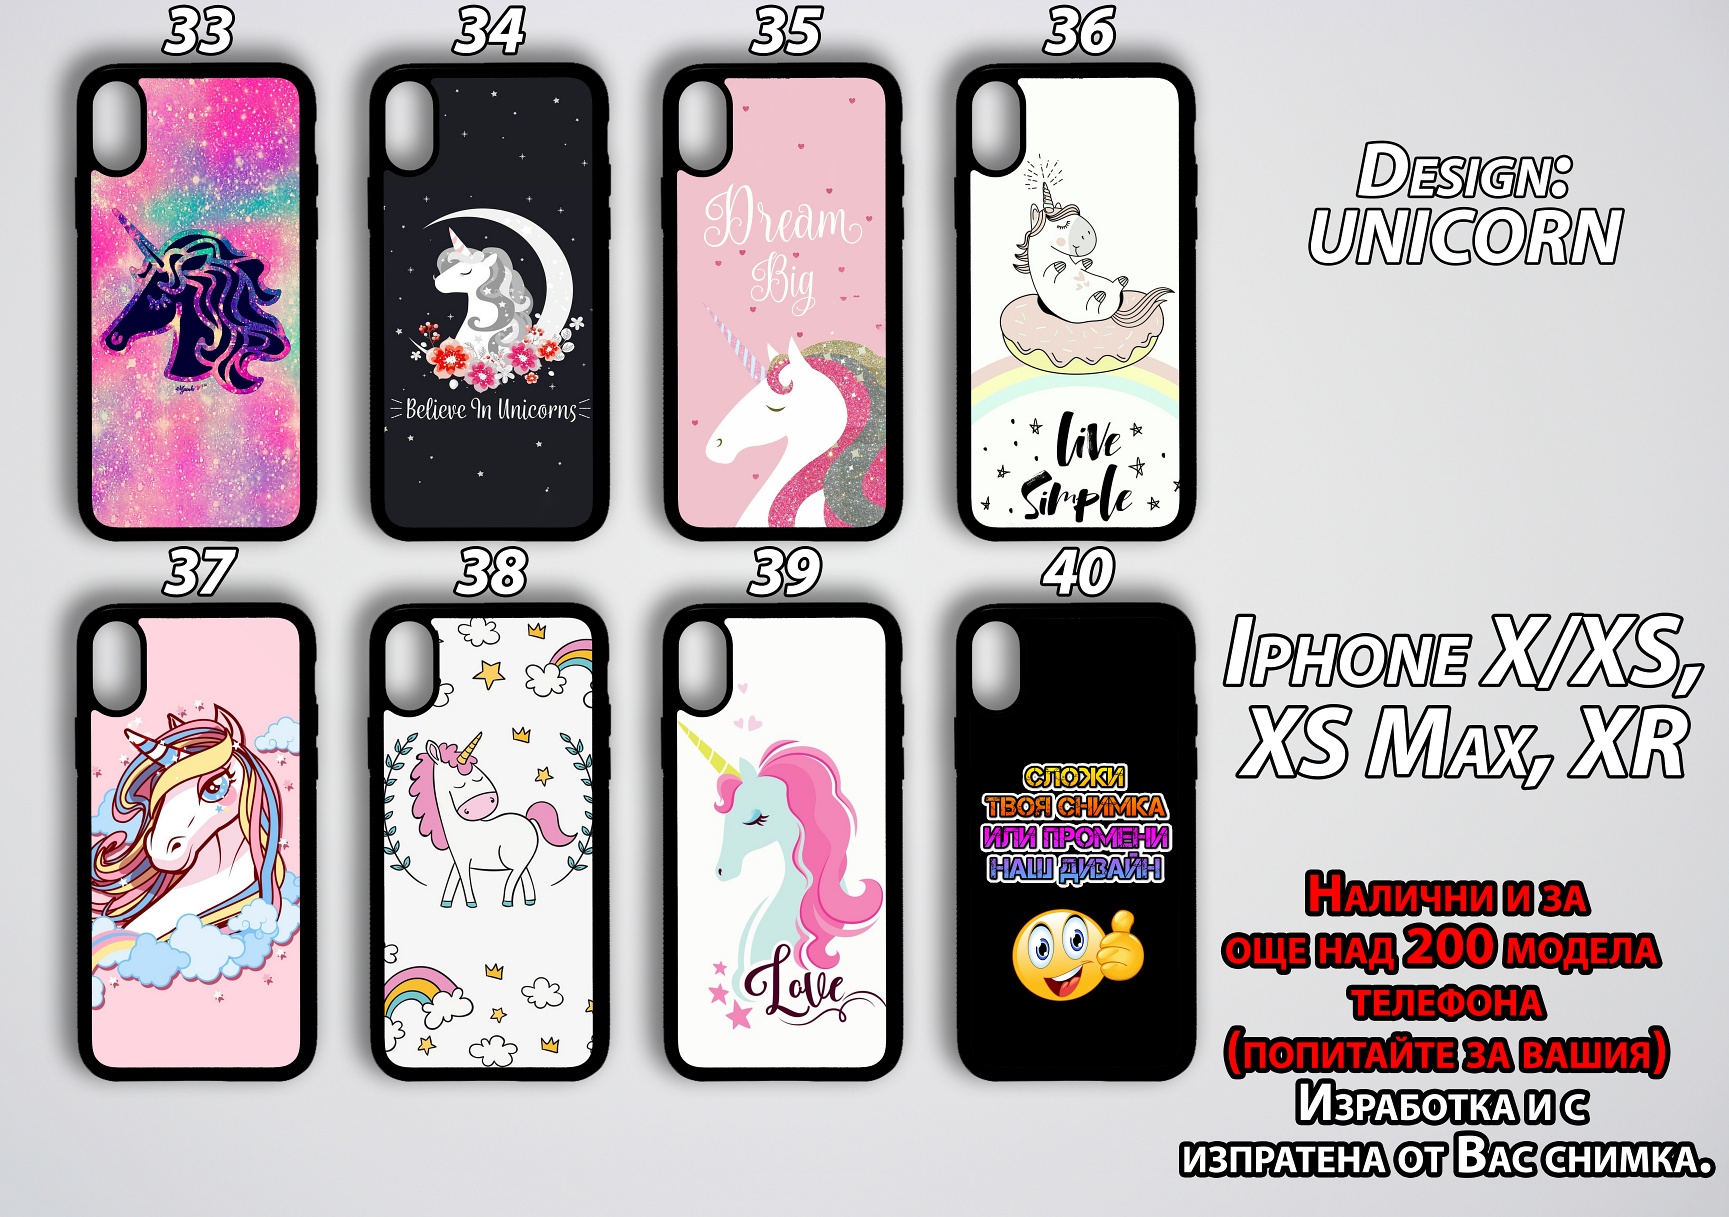 mobile phone cases Unicorn 33